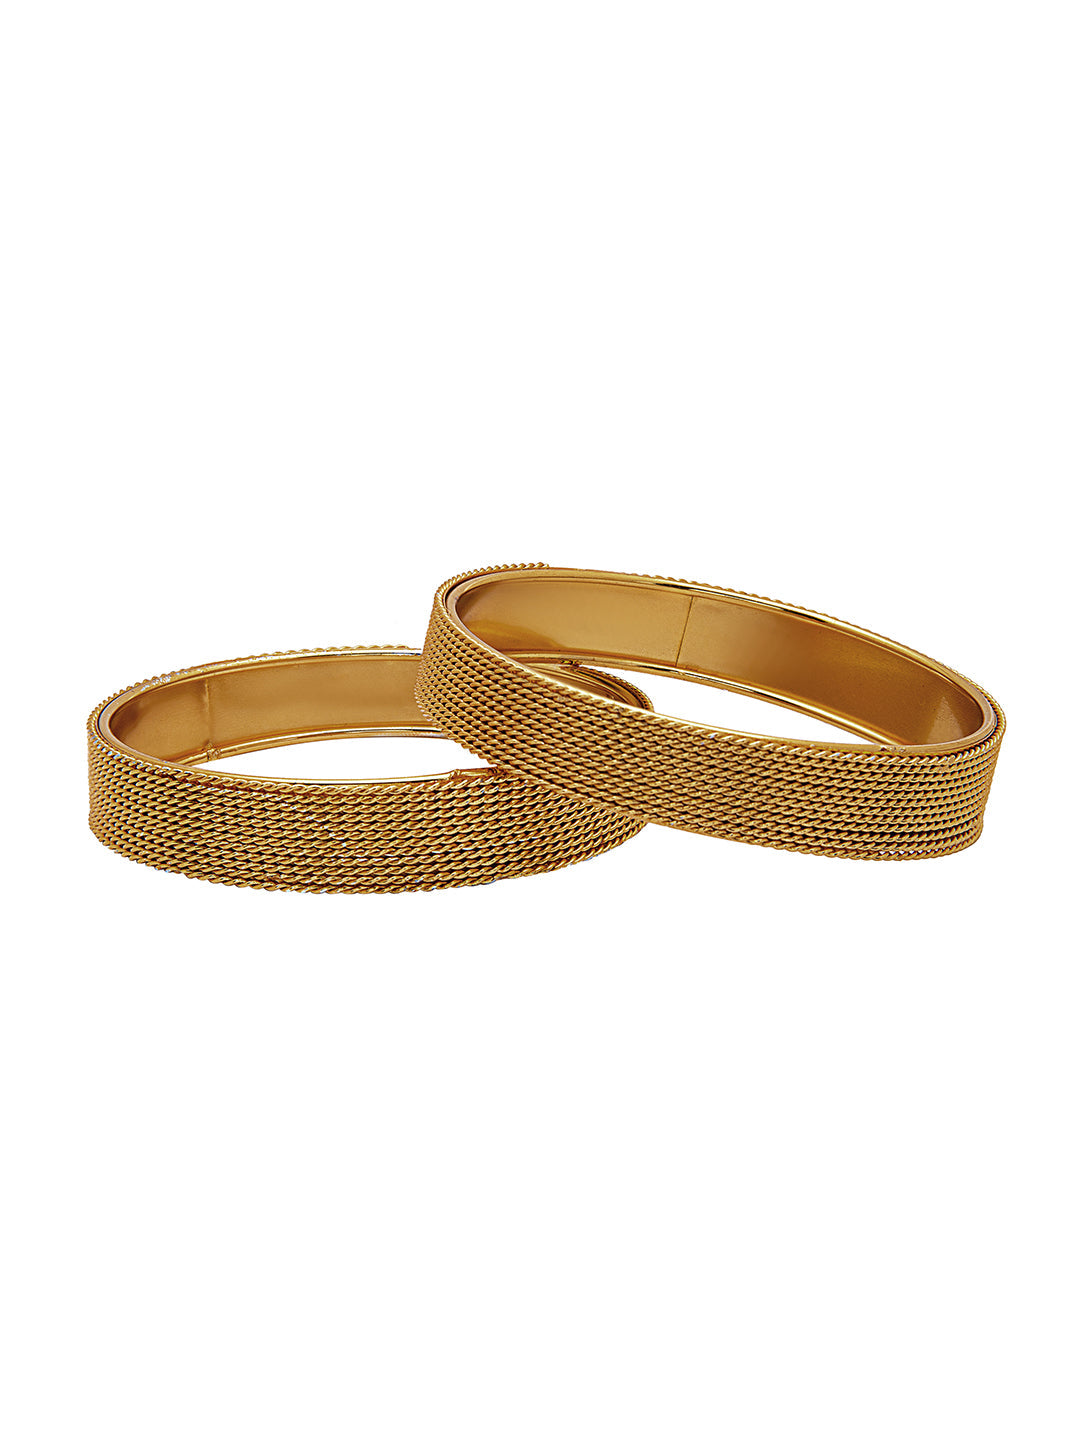 Buy quality 22kt gold antique ladies bracelet kvAB002 in Patan